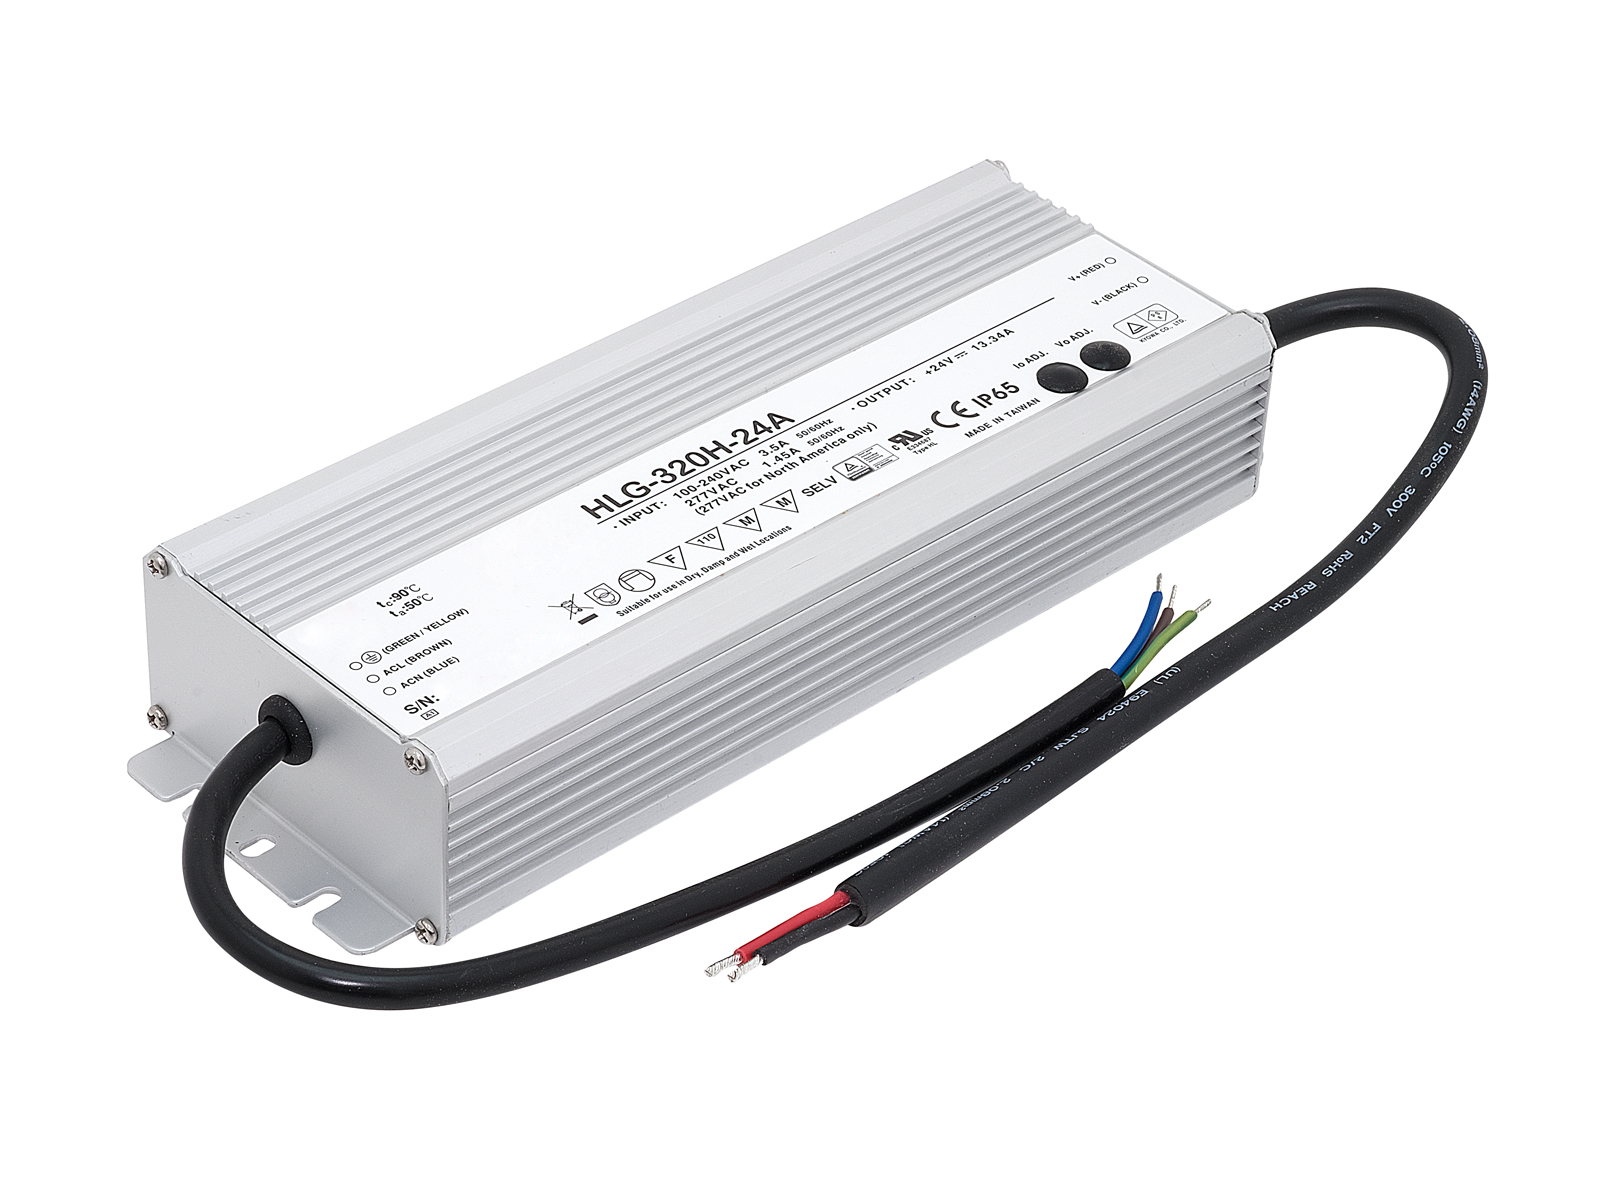 LED-Netzteil 24Vdc 320W 13,3A HLG-320-24 IP65 kaufen